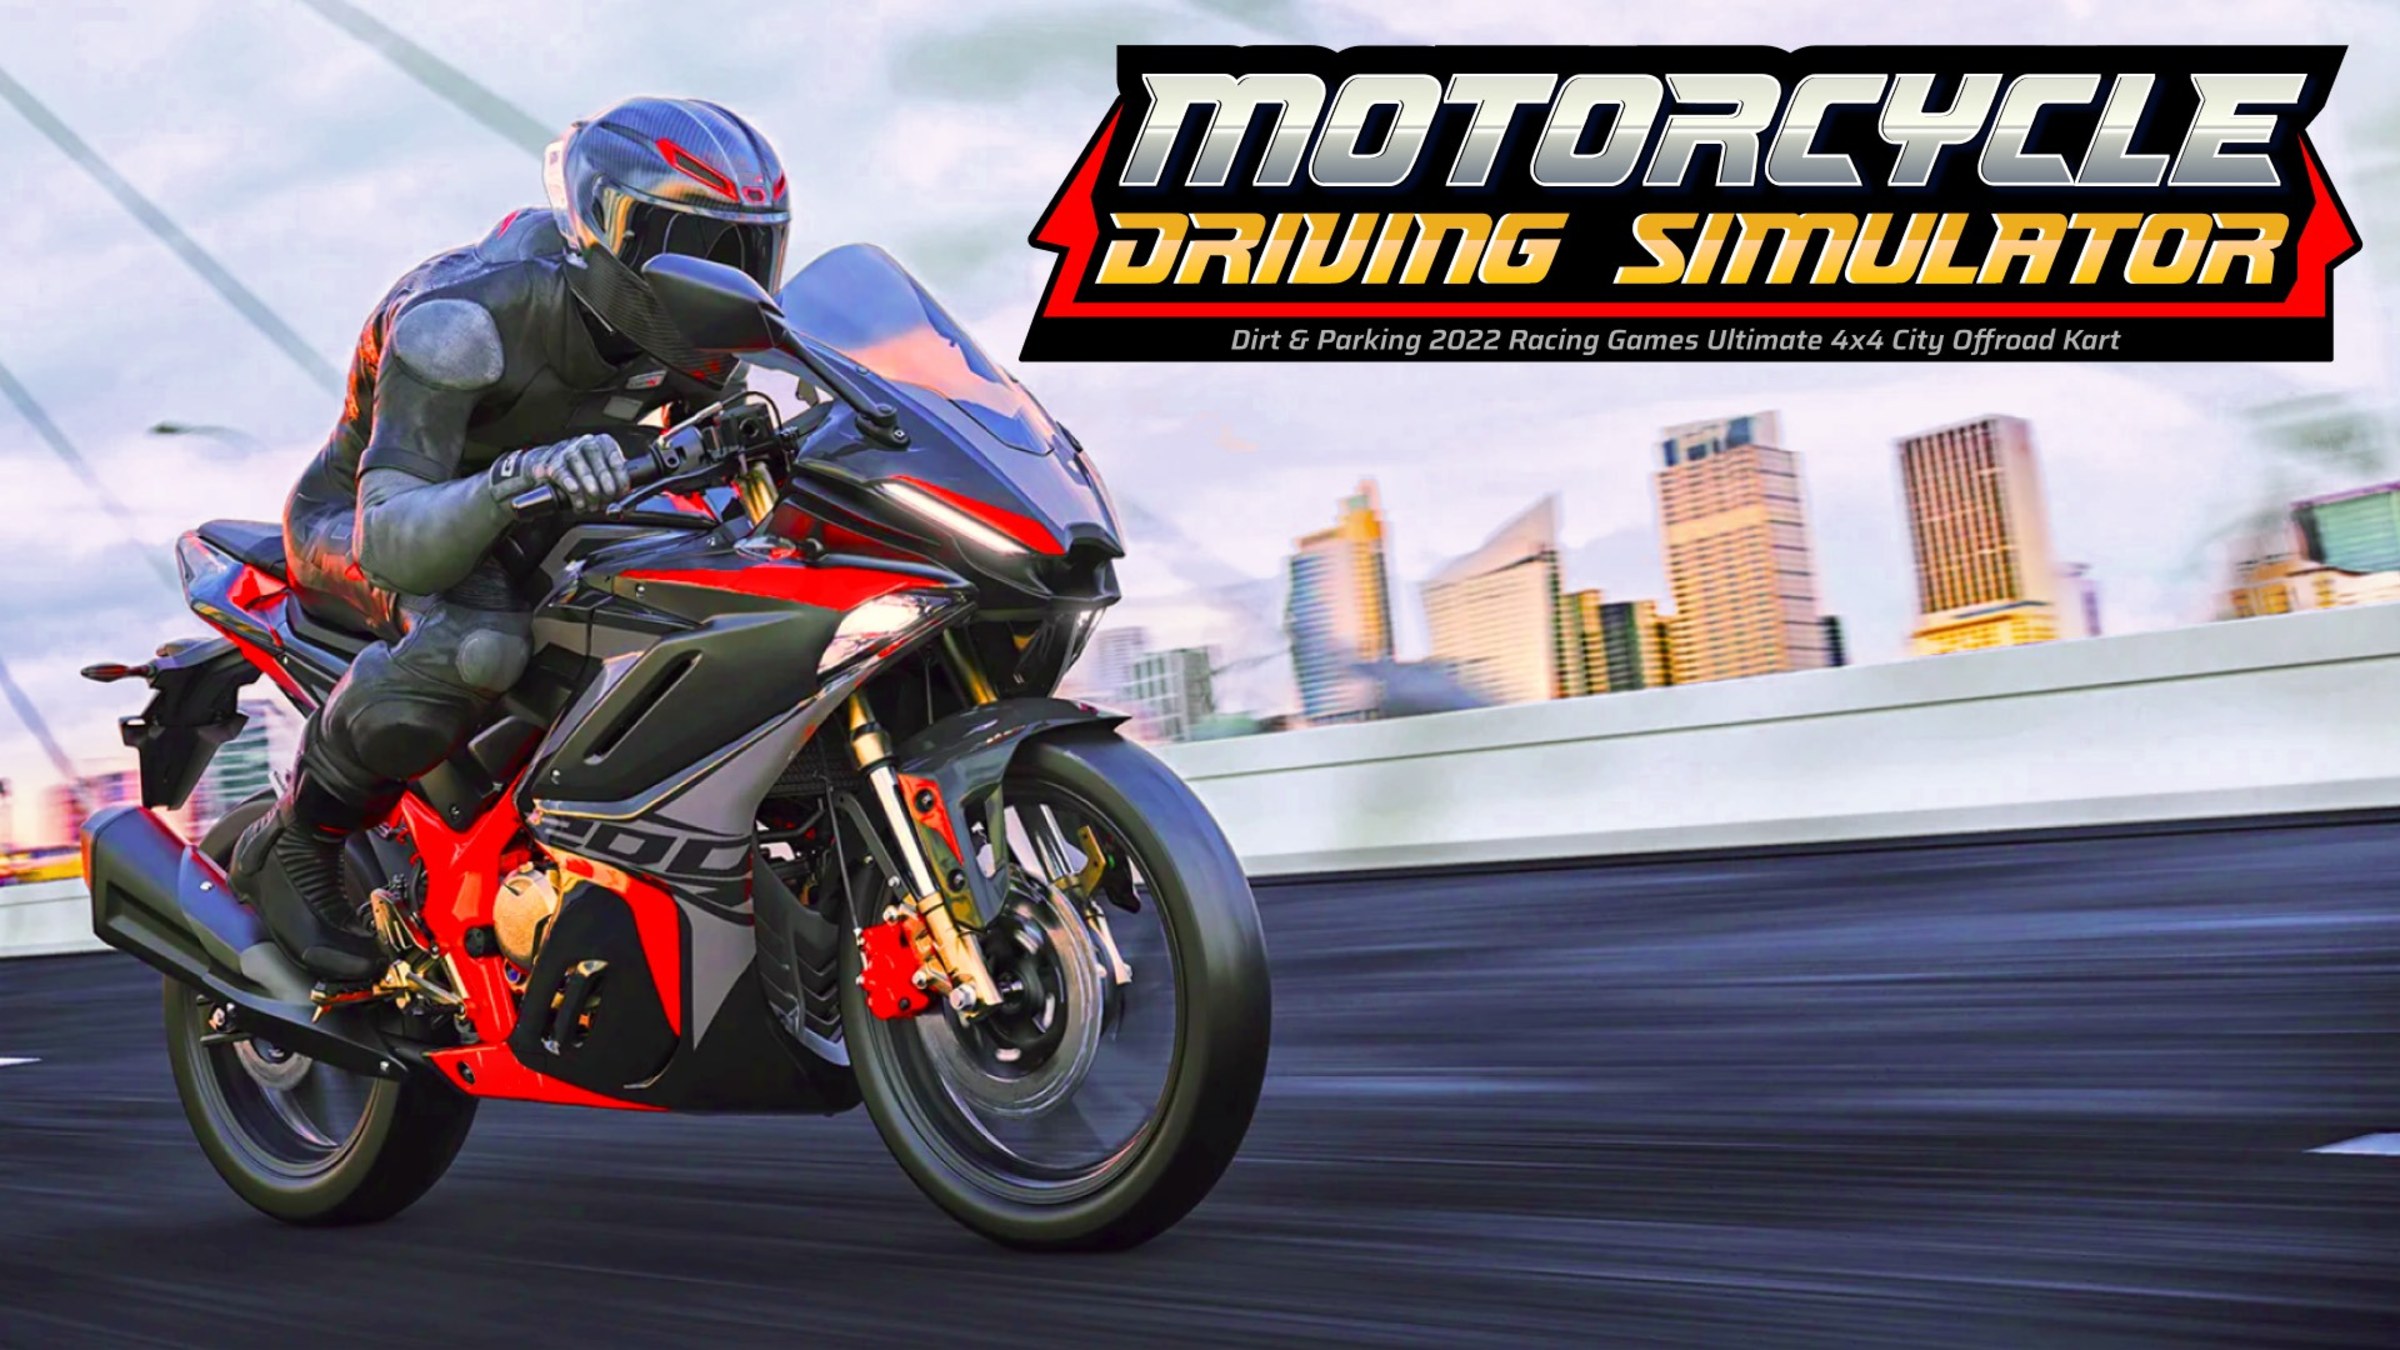 Jogo Nintendo Switch Moto Racer (Definitive Edition)